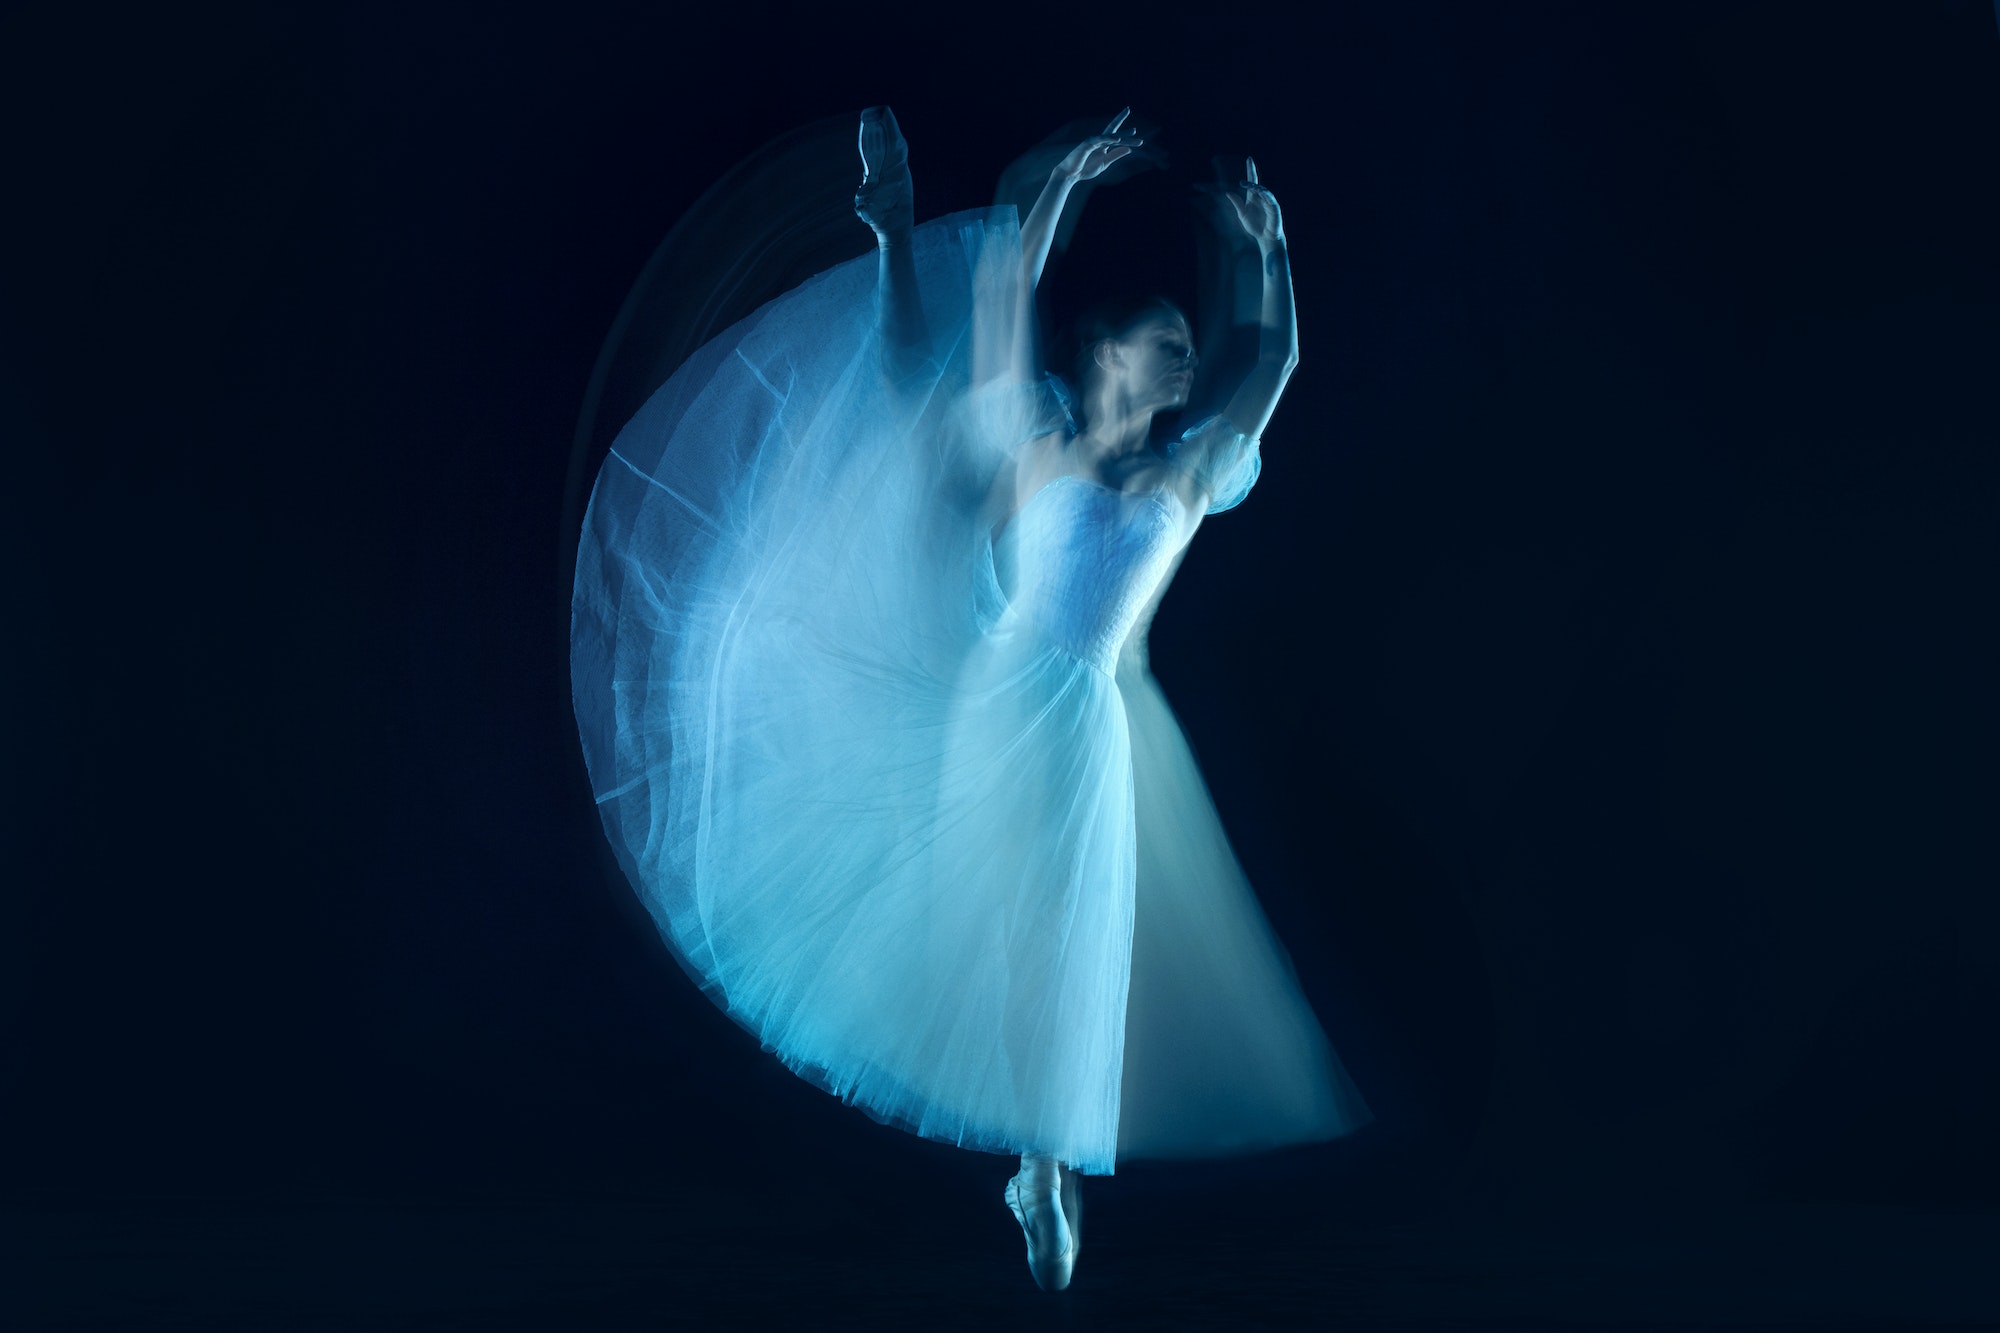 photo as art - a sensual and emotional dance of beautiful ballerina through the veil